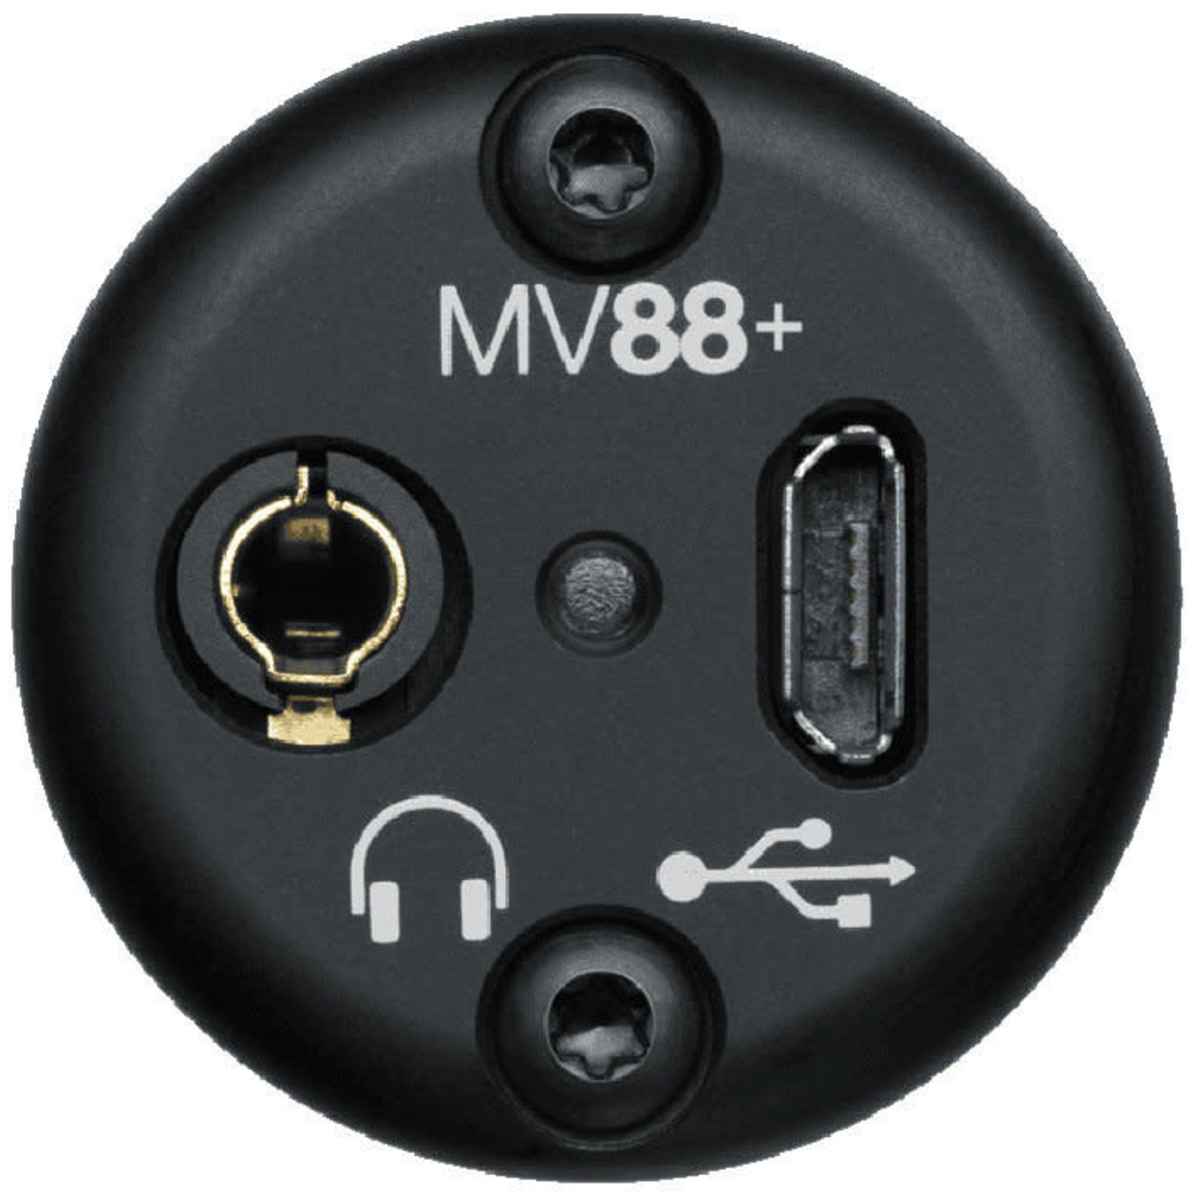 Shure MV88+ Video Kit Digital Stereo Condenser Microphone 